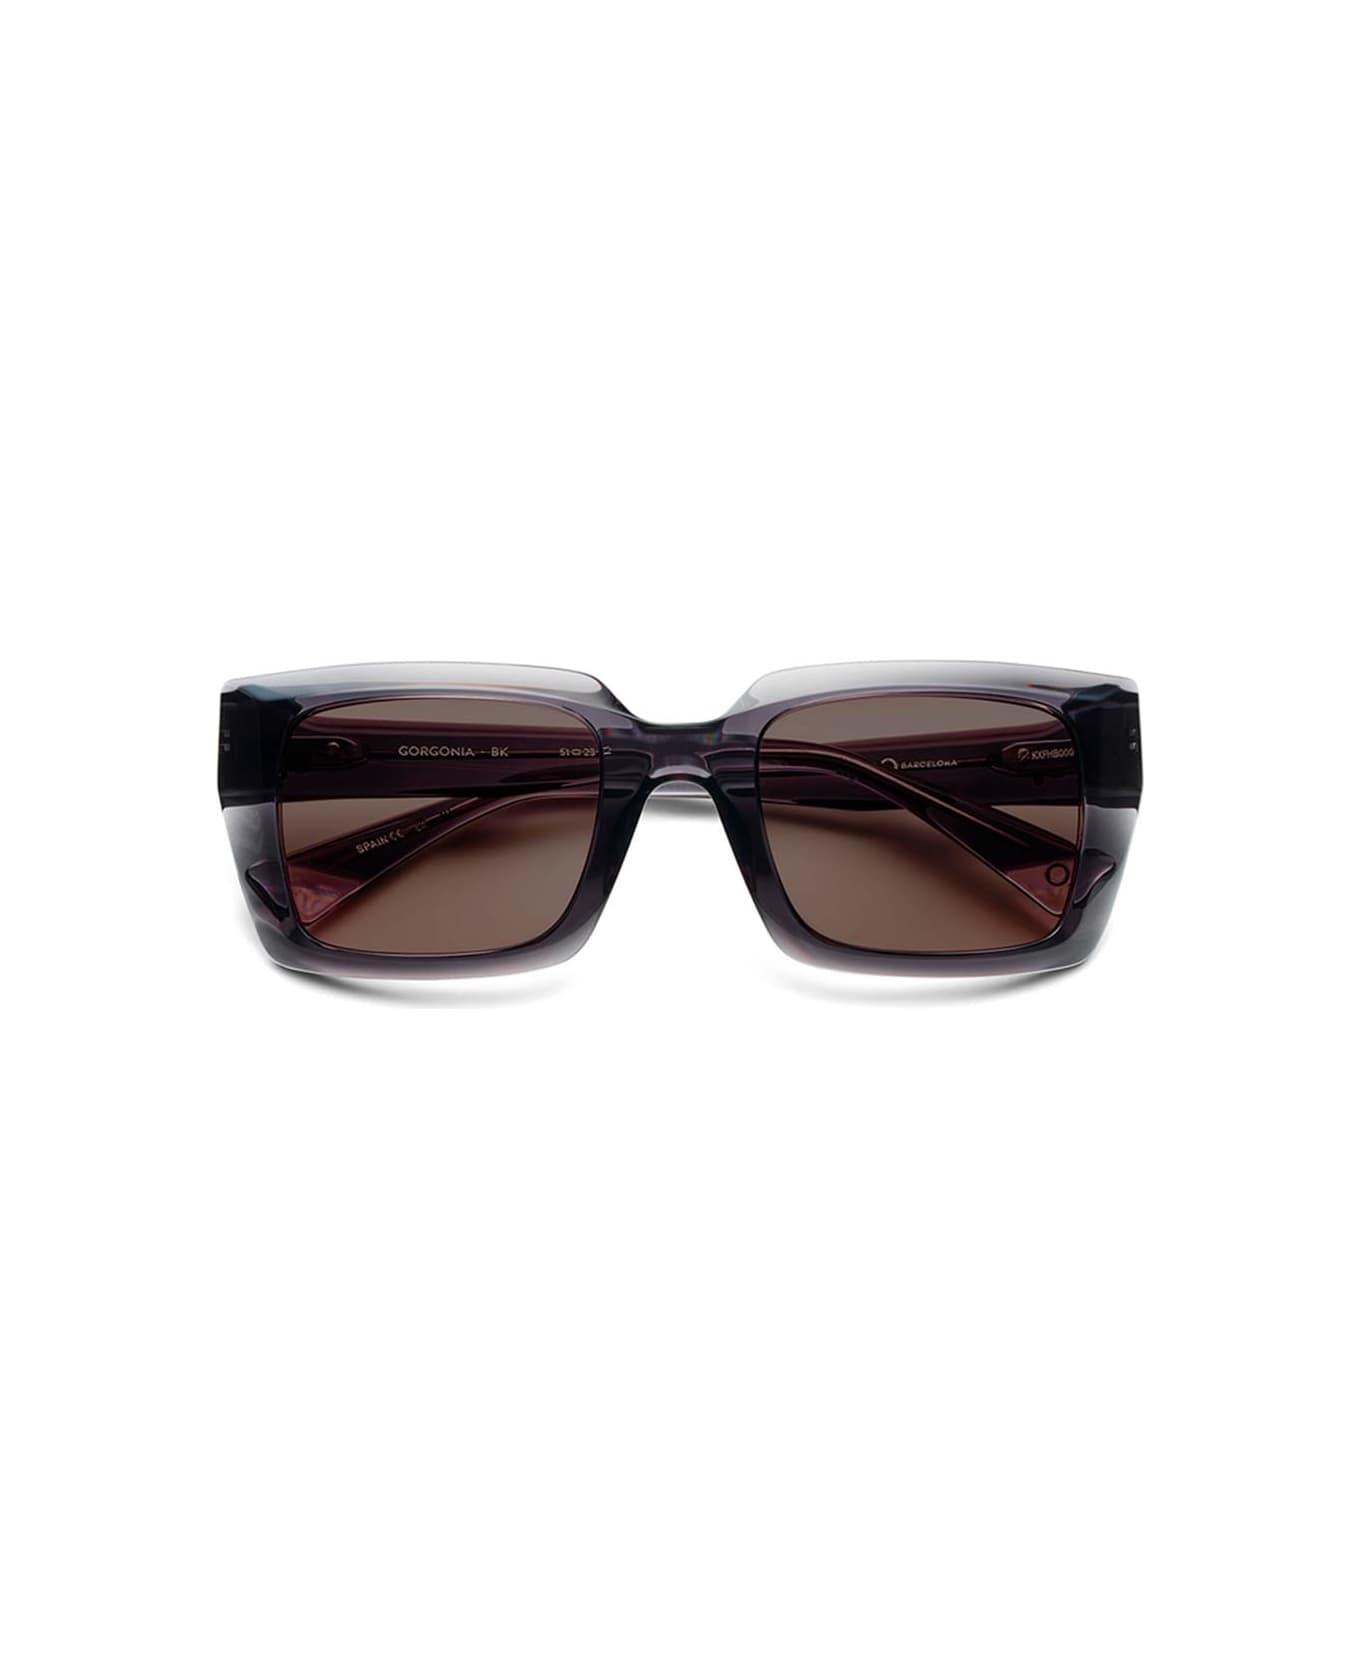 Etnia Barcelona Sunglasses - Nero/Grigio